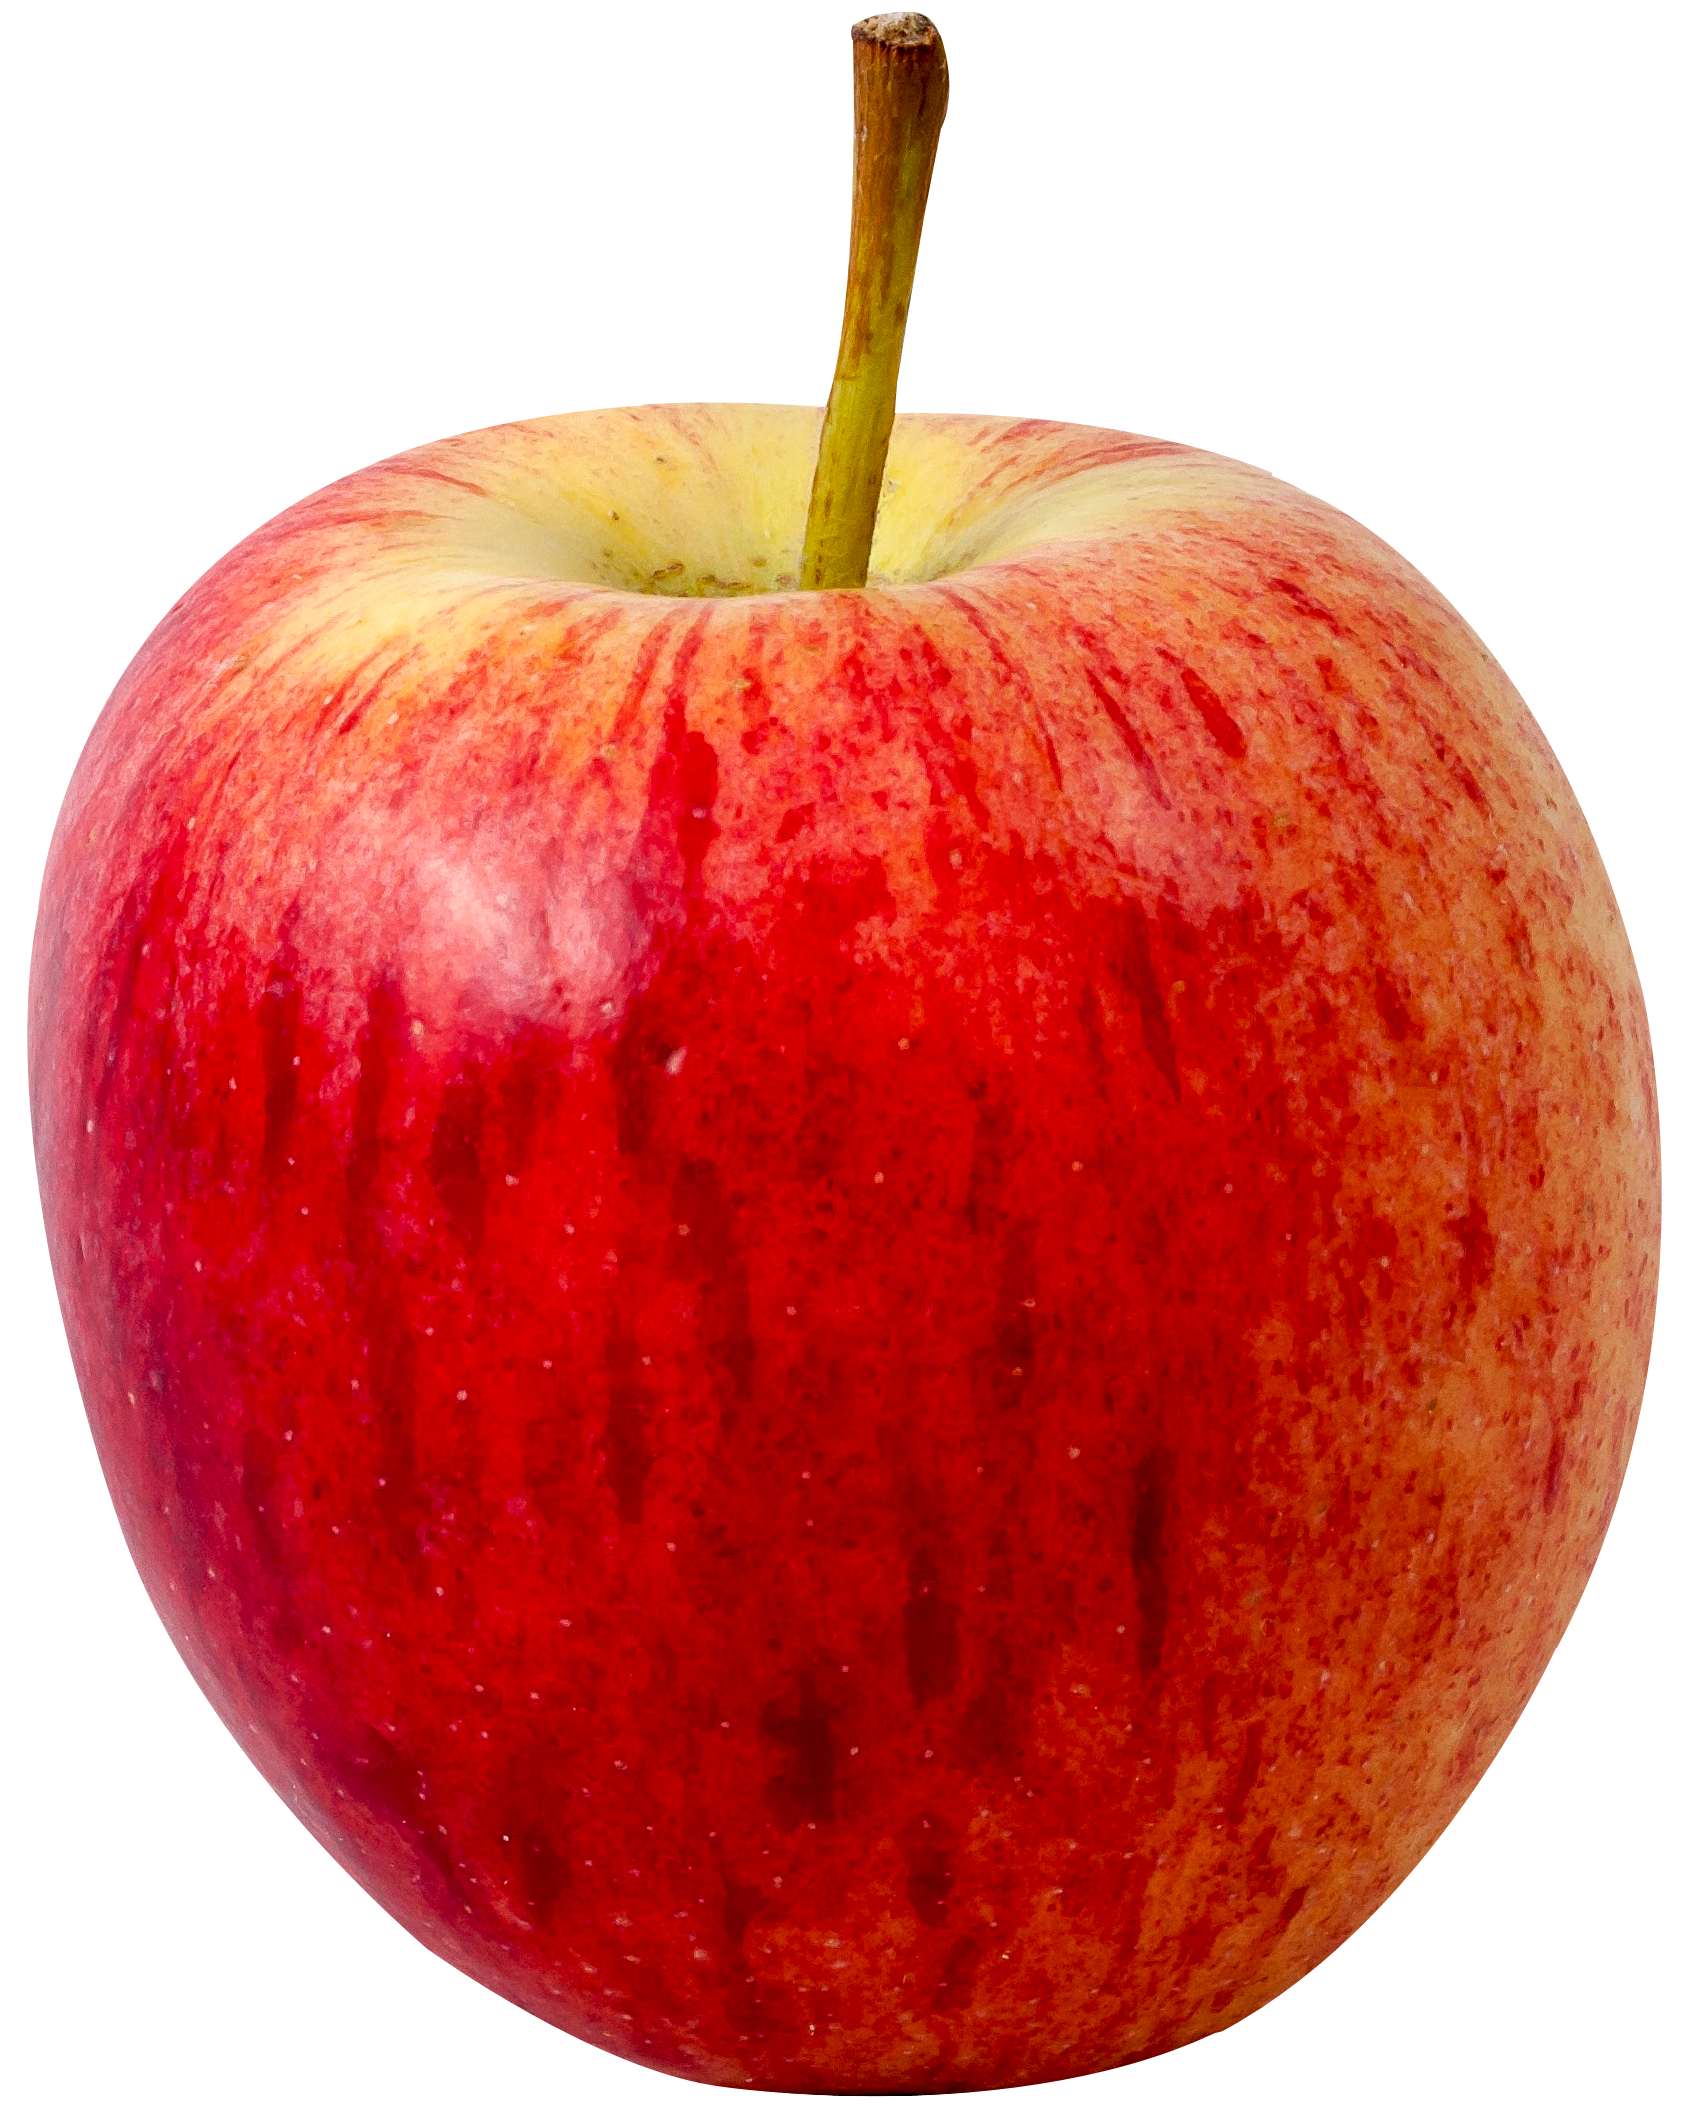 apples clipart transparent background